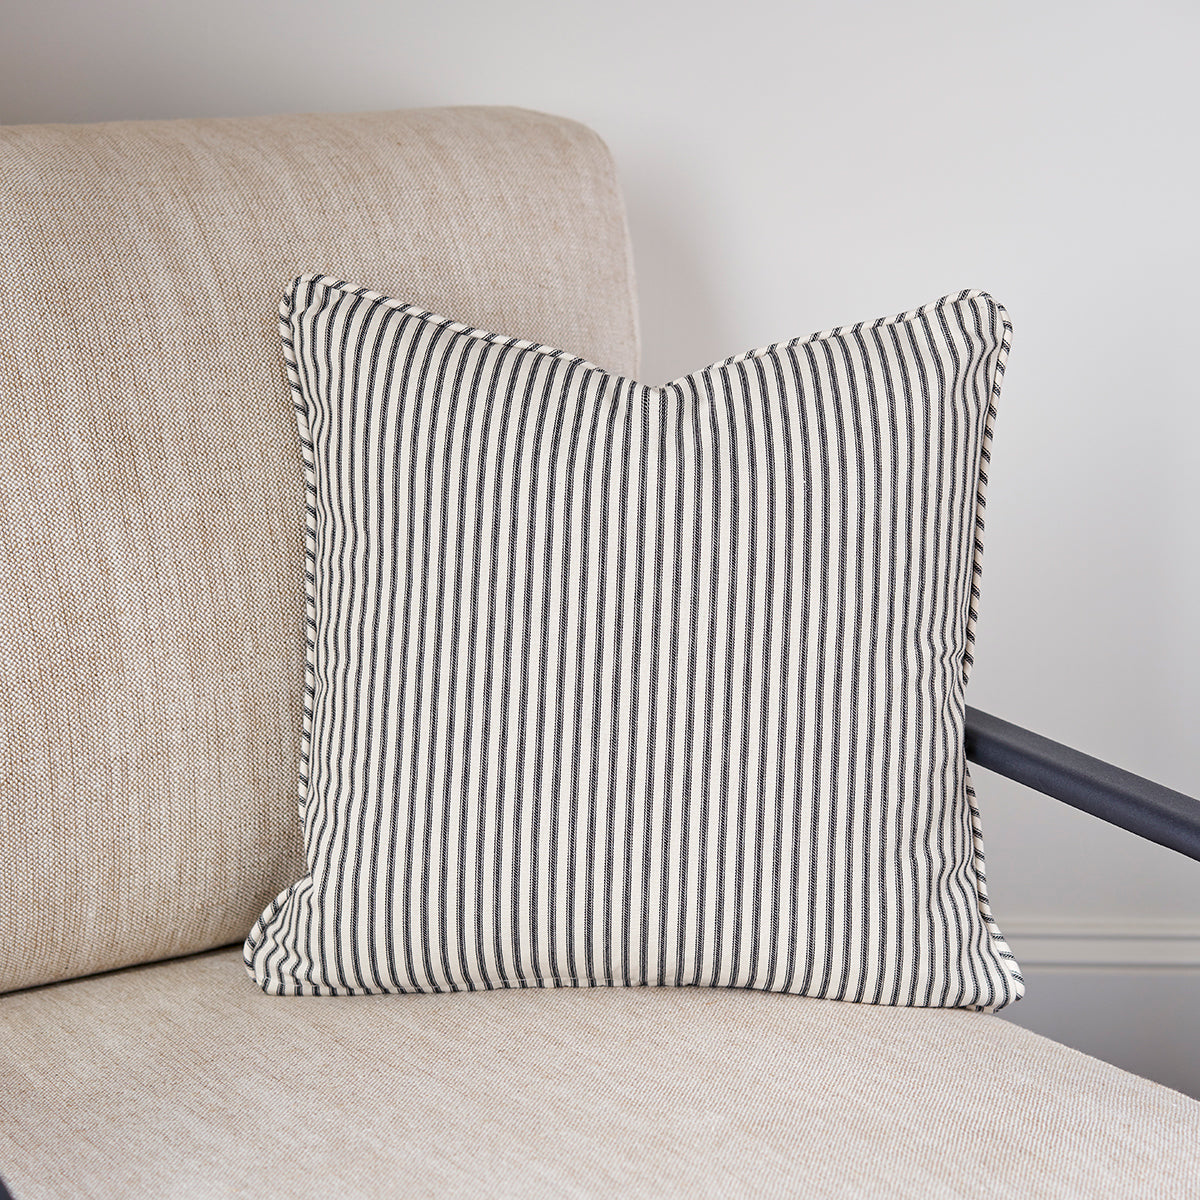 Ticking Stripe Throw Pillow Cover 18x18 – Southern Ticking Co.